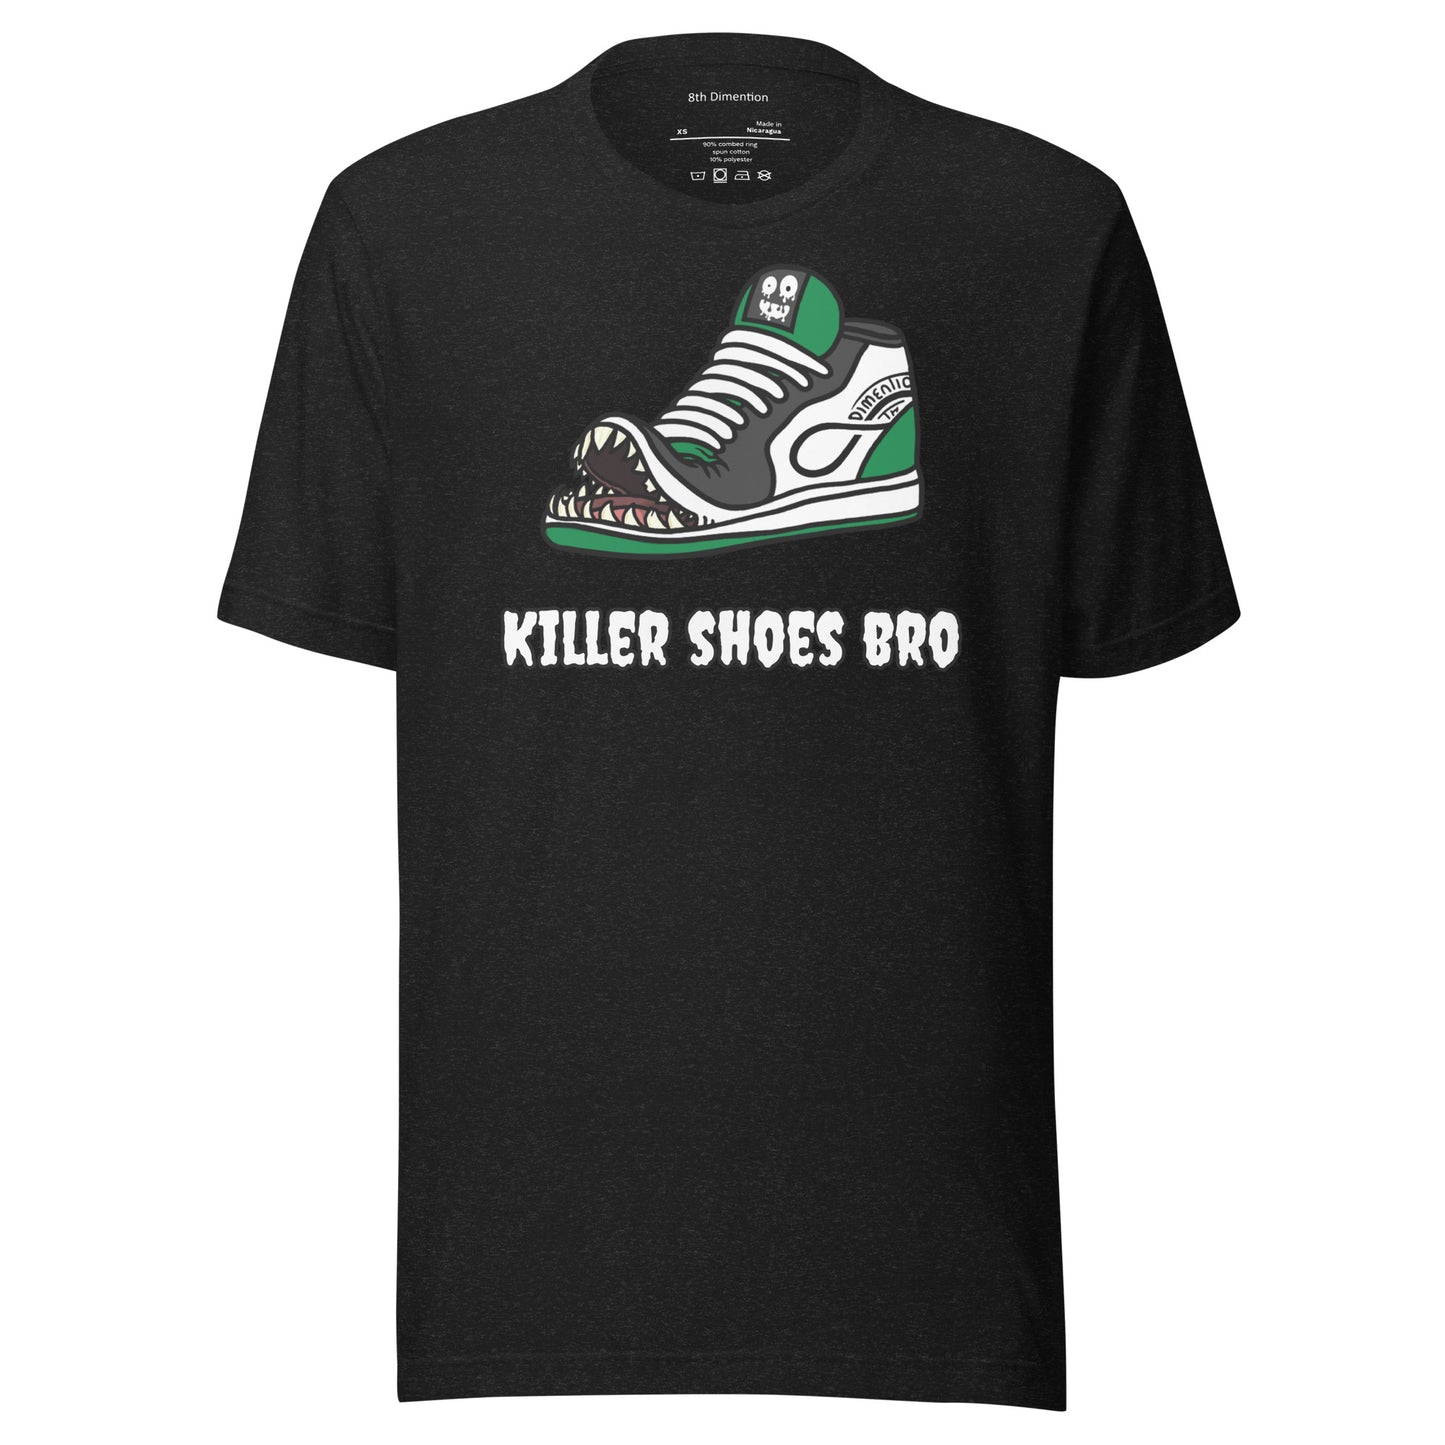 Killer shoes bro Unisex t-shirt